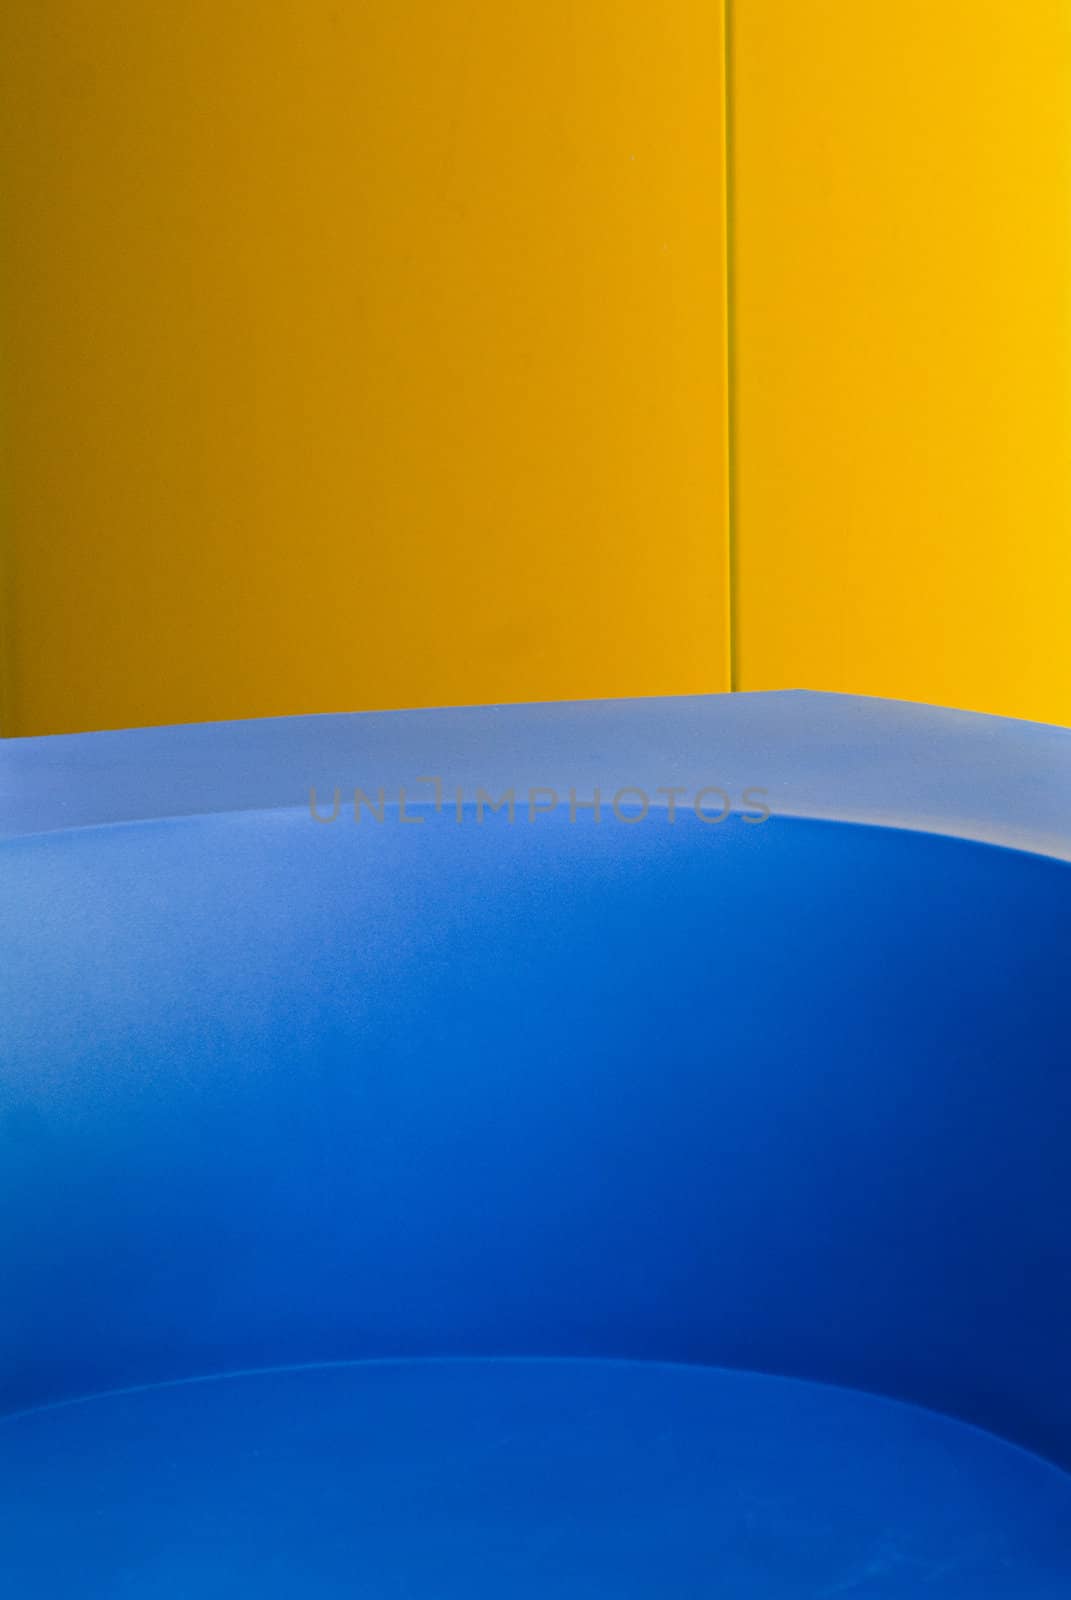 Blue Chair at Yellow Pillar by emattil